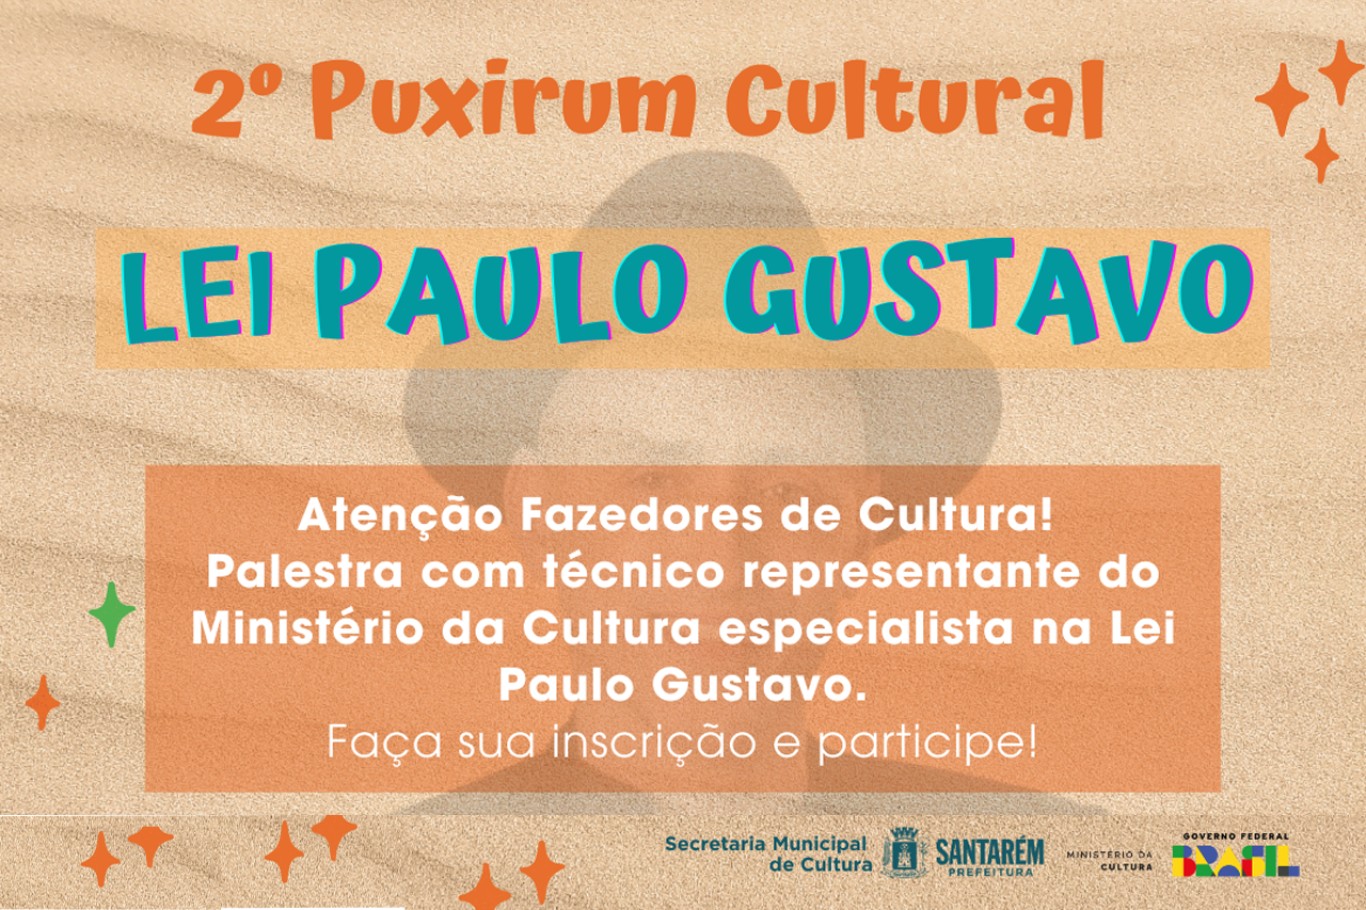 Prefeitura realiza segundo 'Puxirum Cultural' sobre a Lei Paulo Gustavo